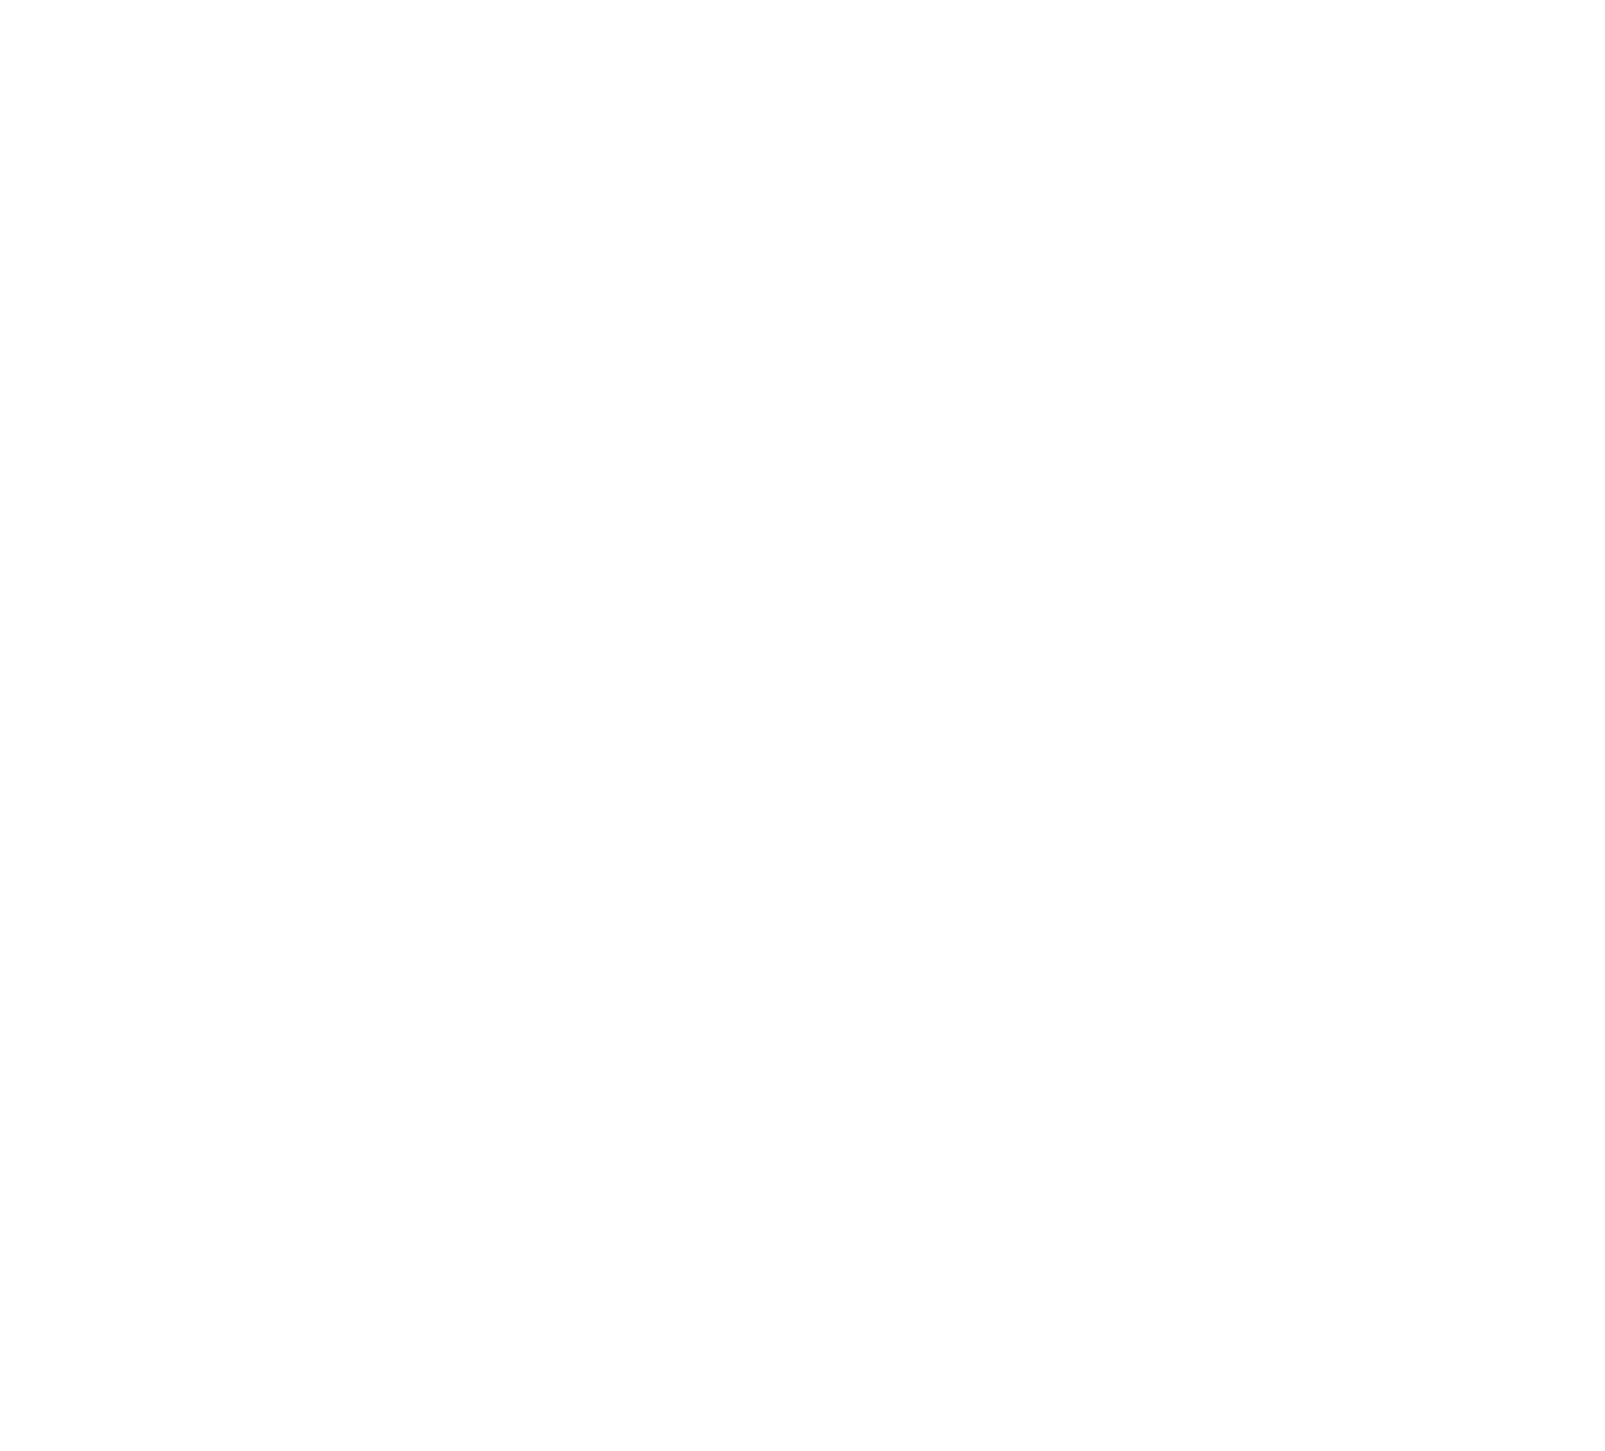 Etihad Etisalat (Mobily) logo for dark backgrounds (transparent PNG)